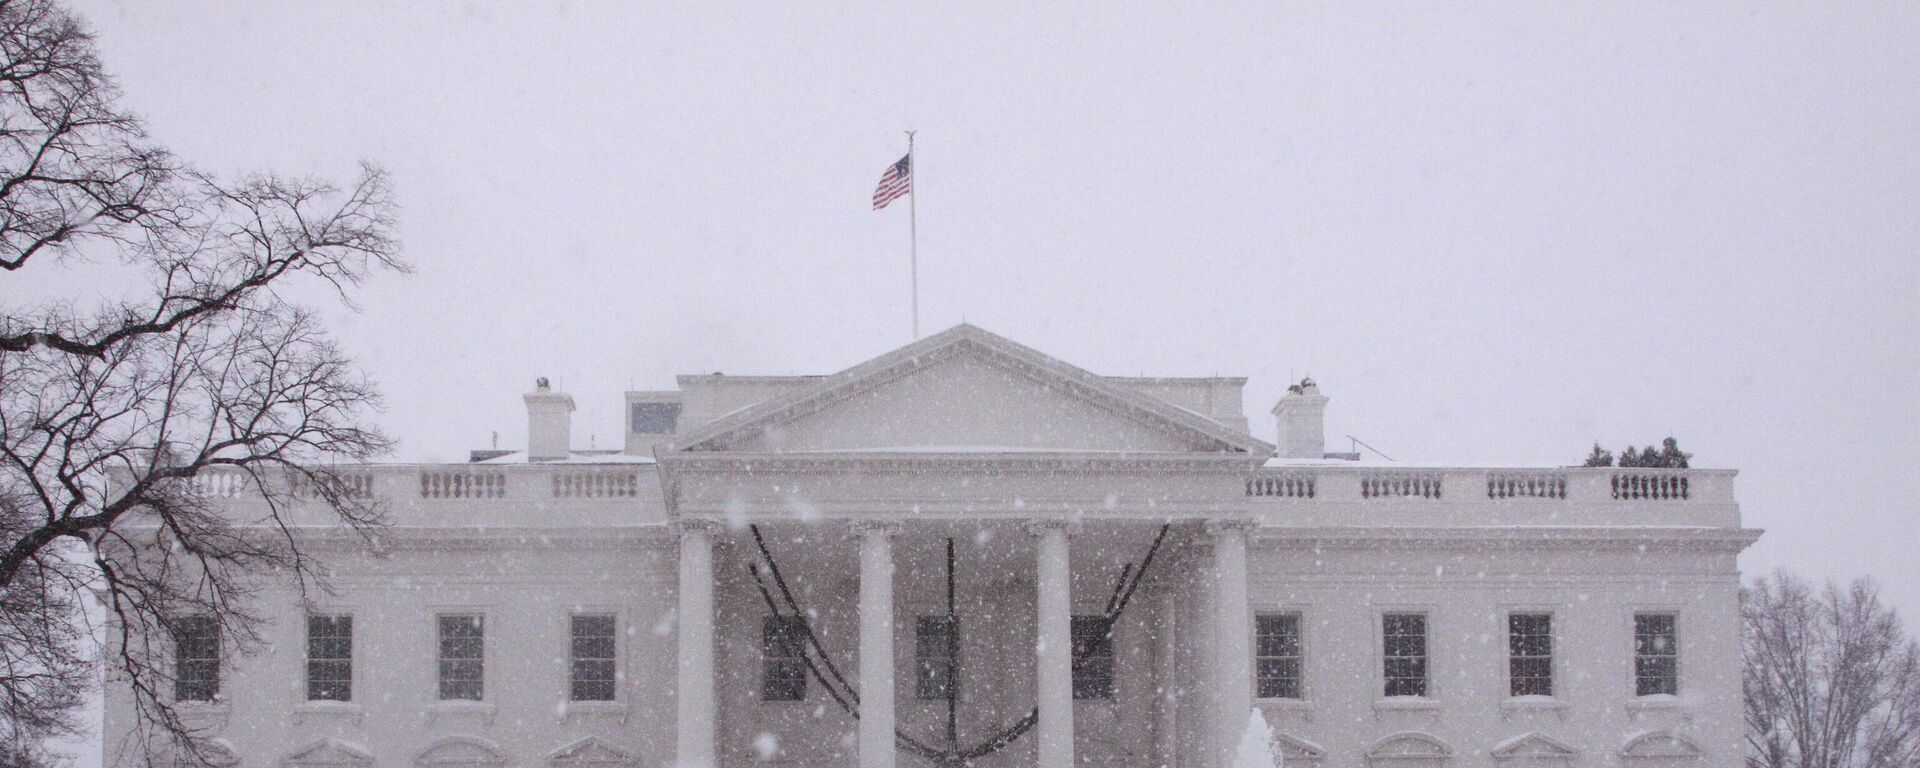 Здание Белого дома в Вашингтоне - резиденция президента США - Sputnik Latvija, 1920, 11.01.2022